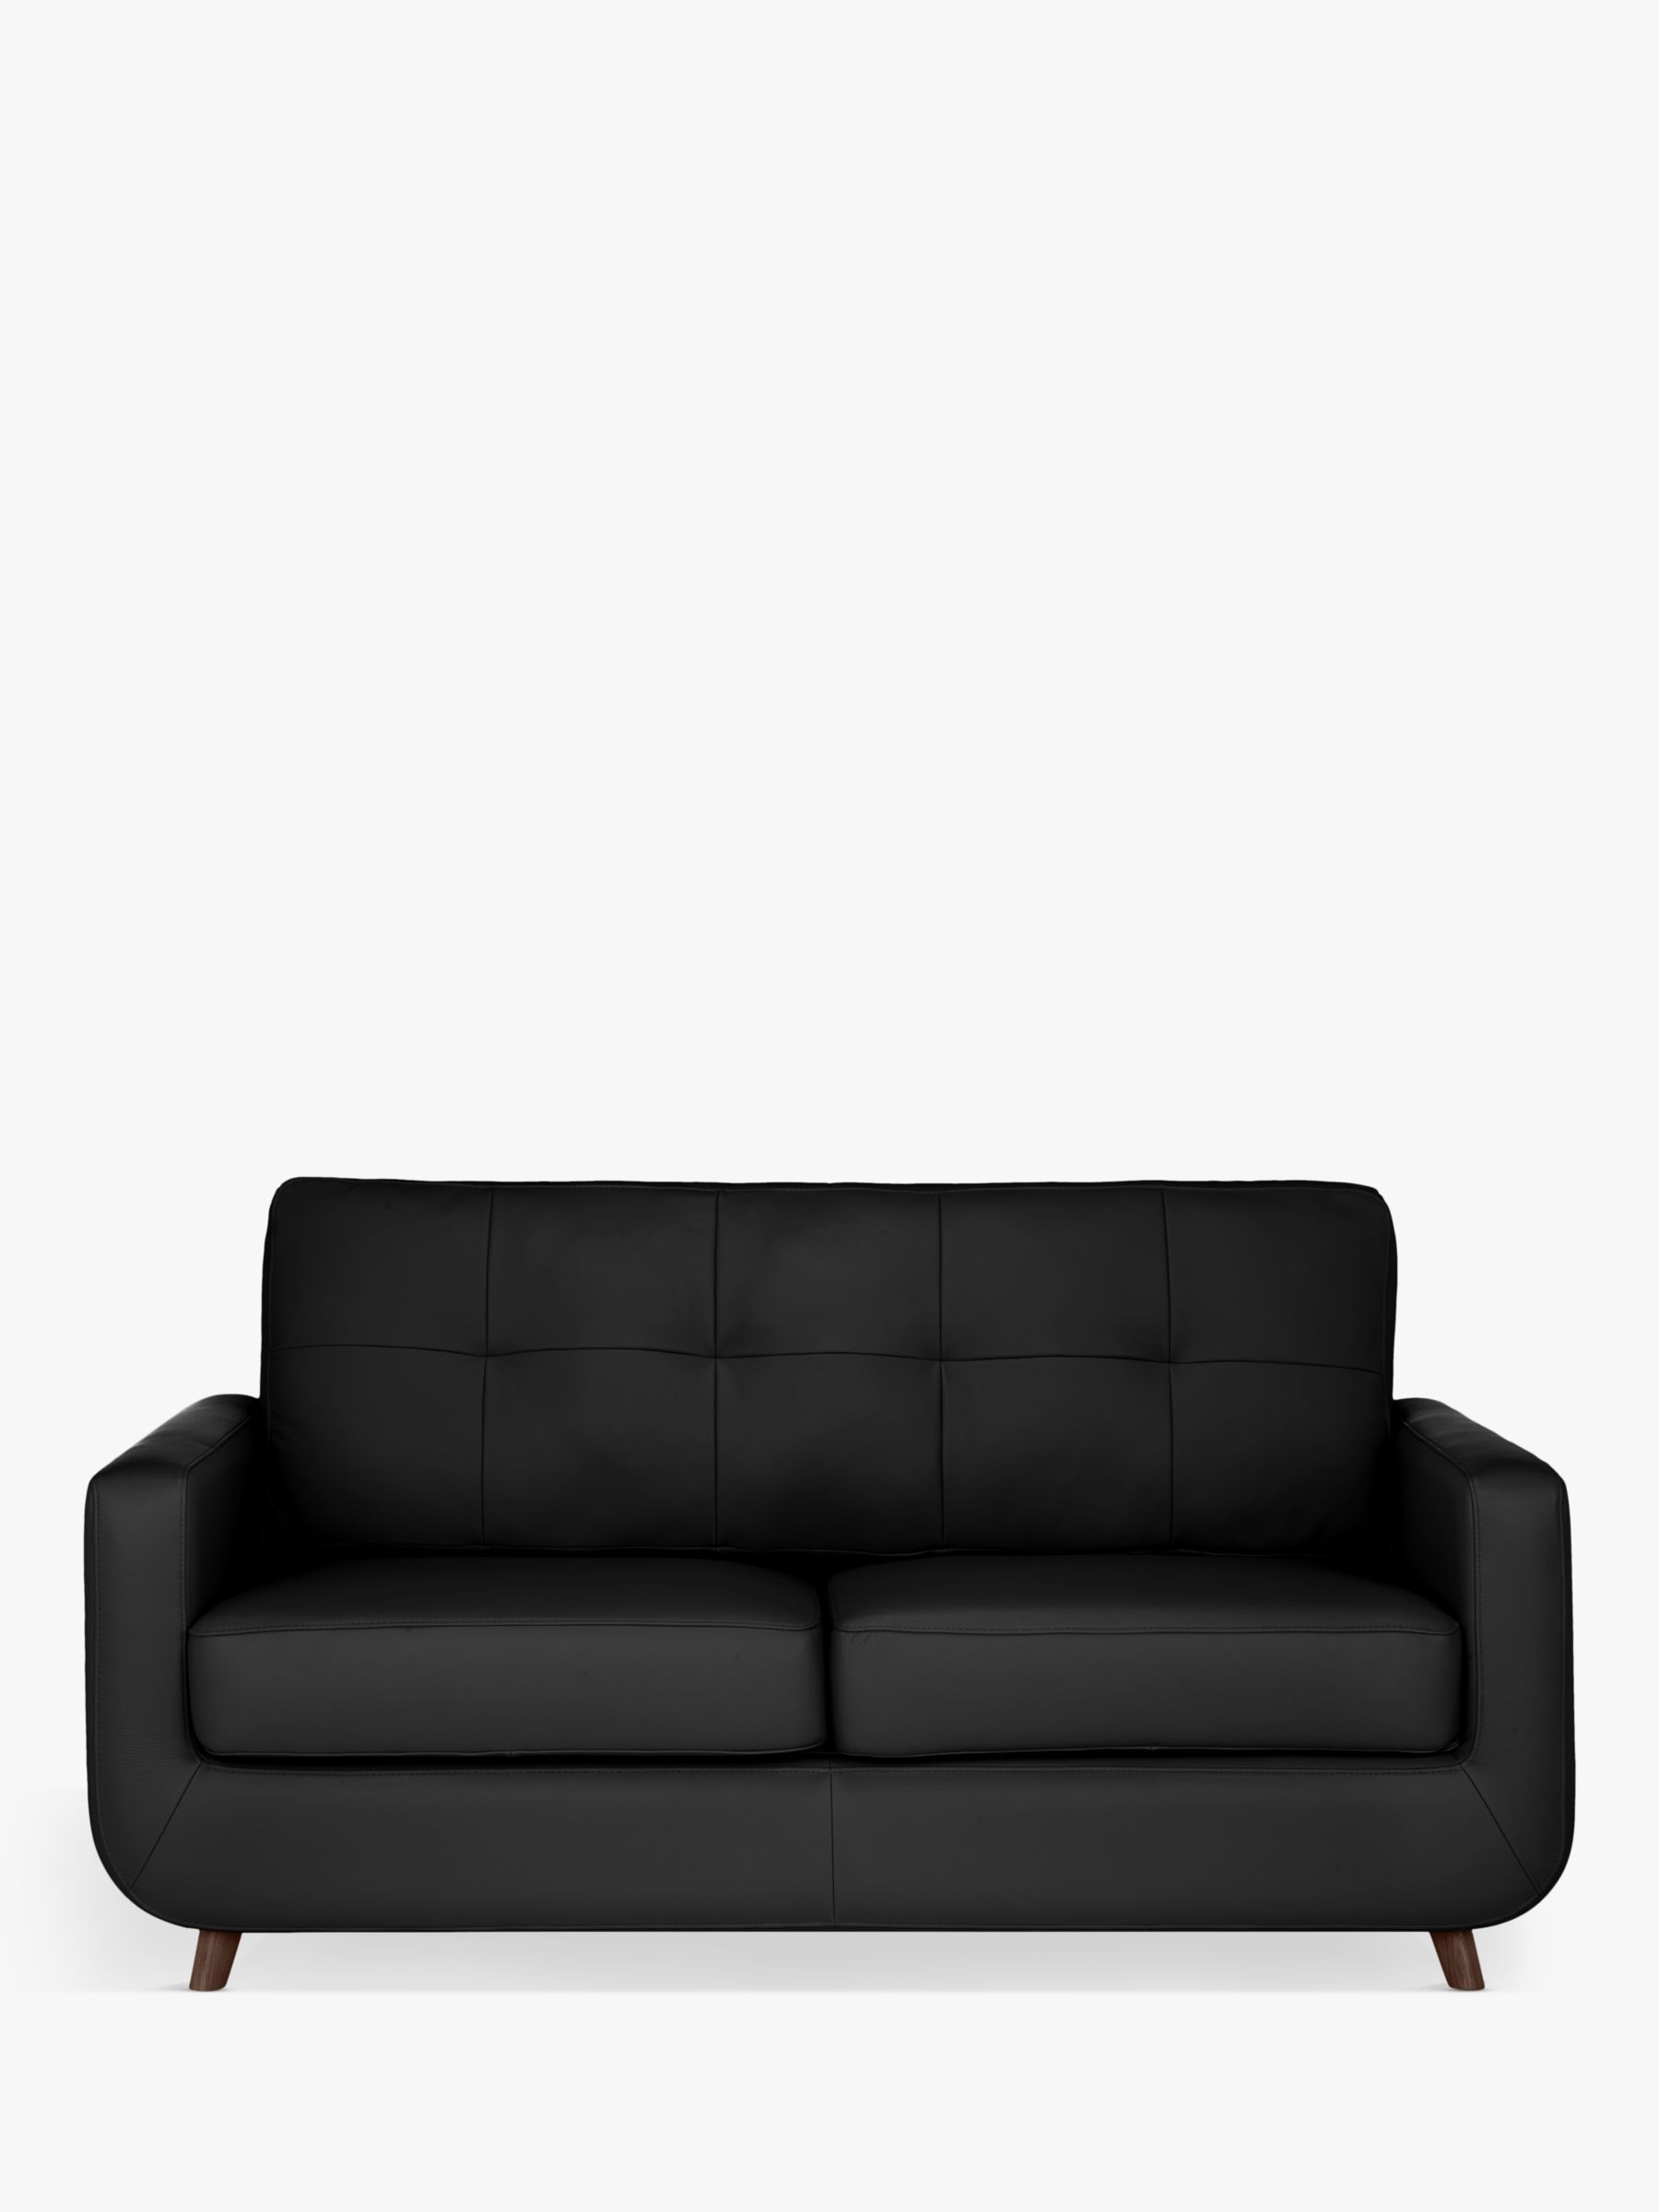 Barbican Range, John Lewis Barbican Medium 2 Seater Leather Sofa, Dark Leg, Contempo Black